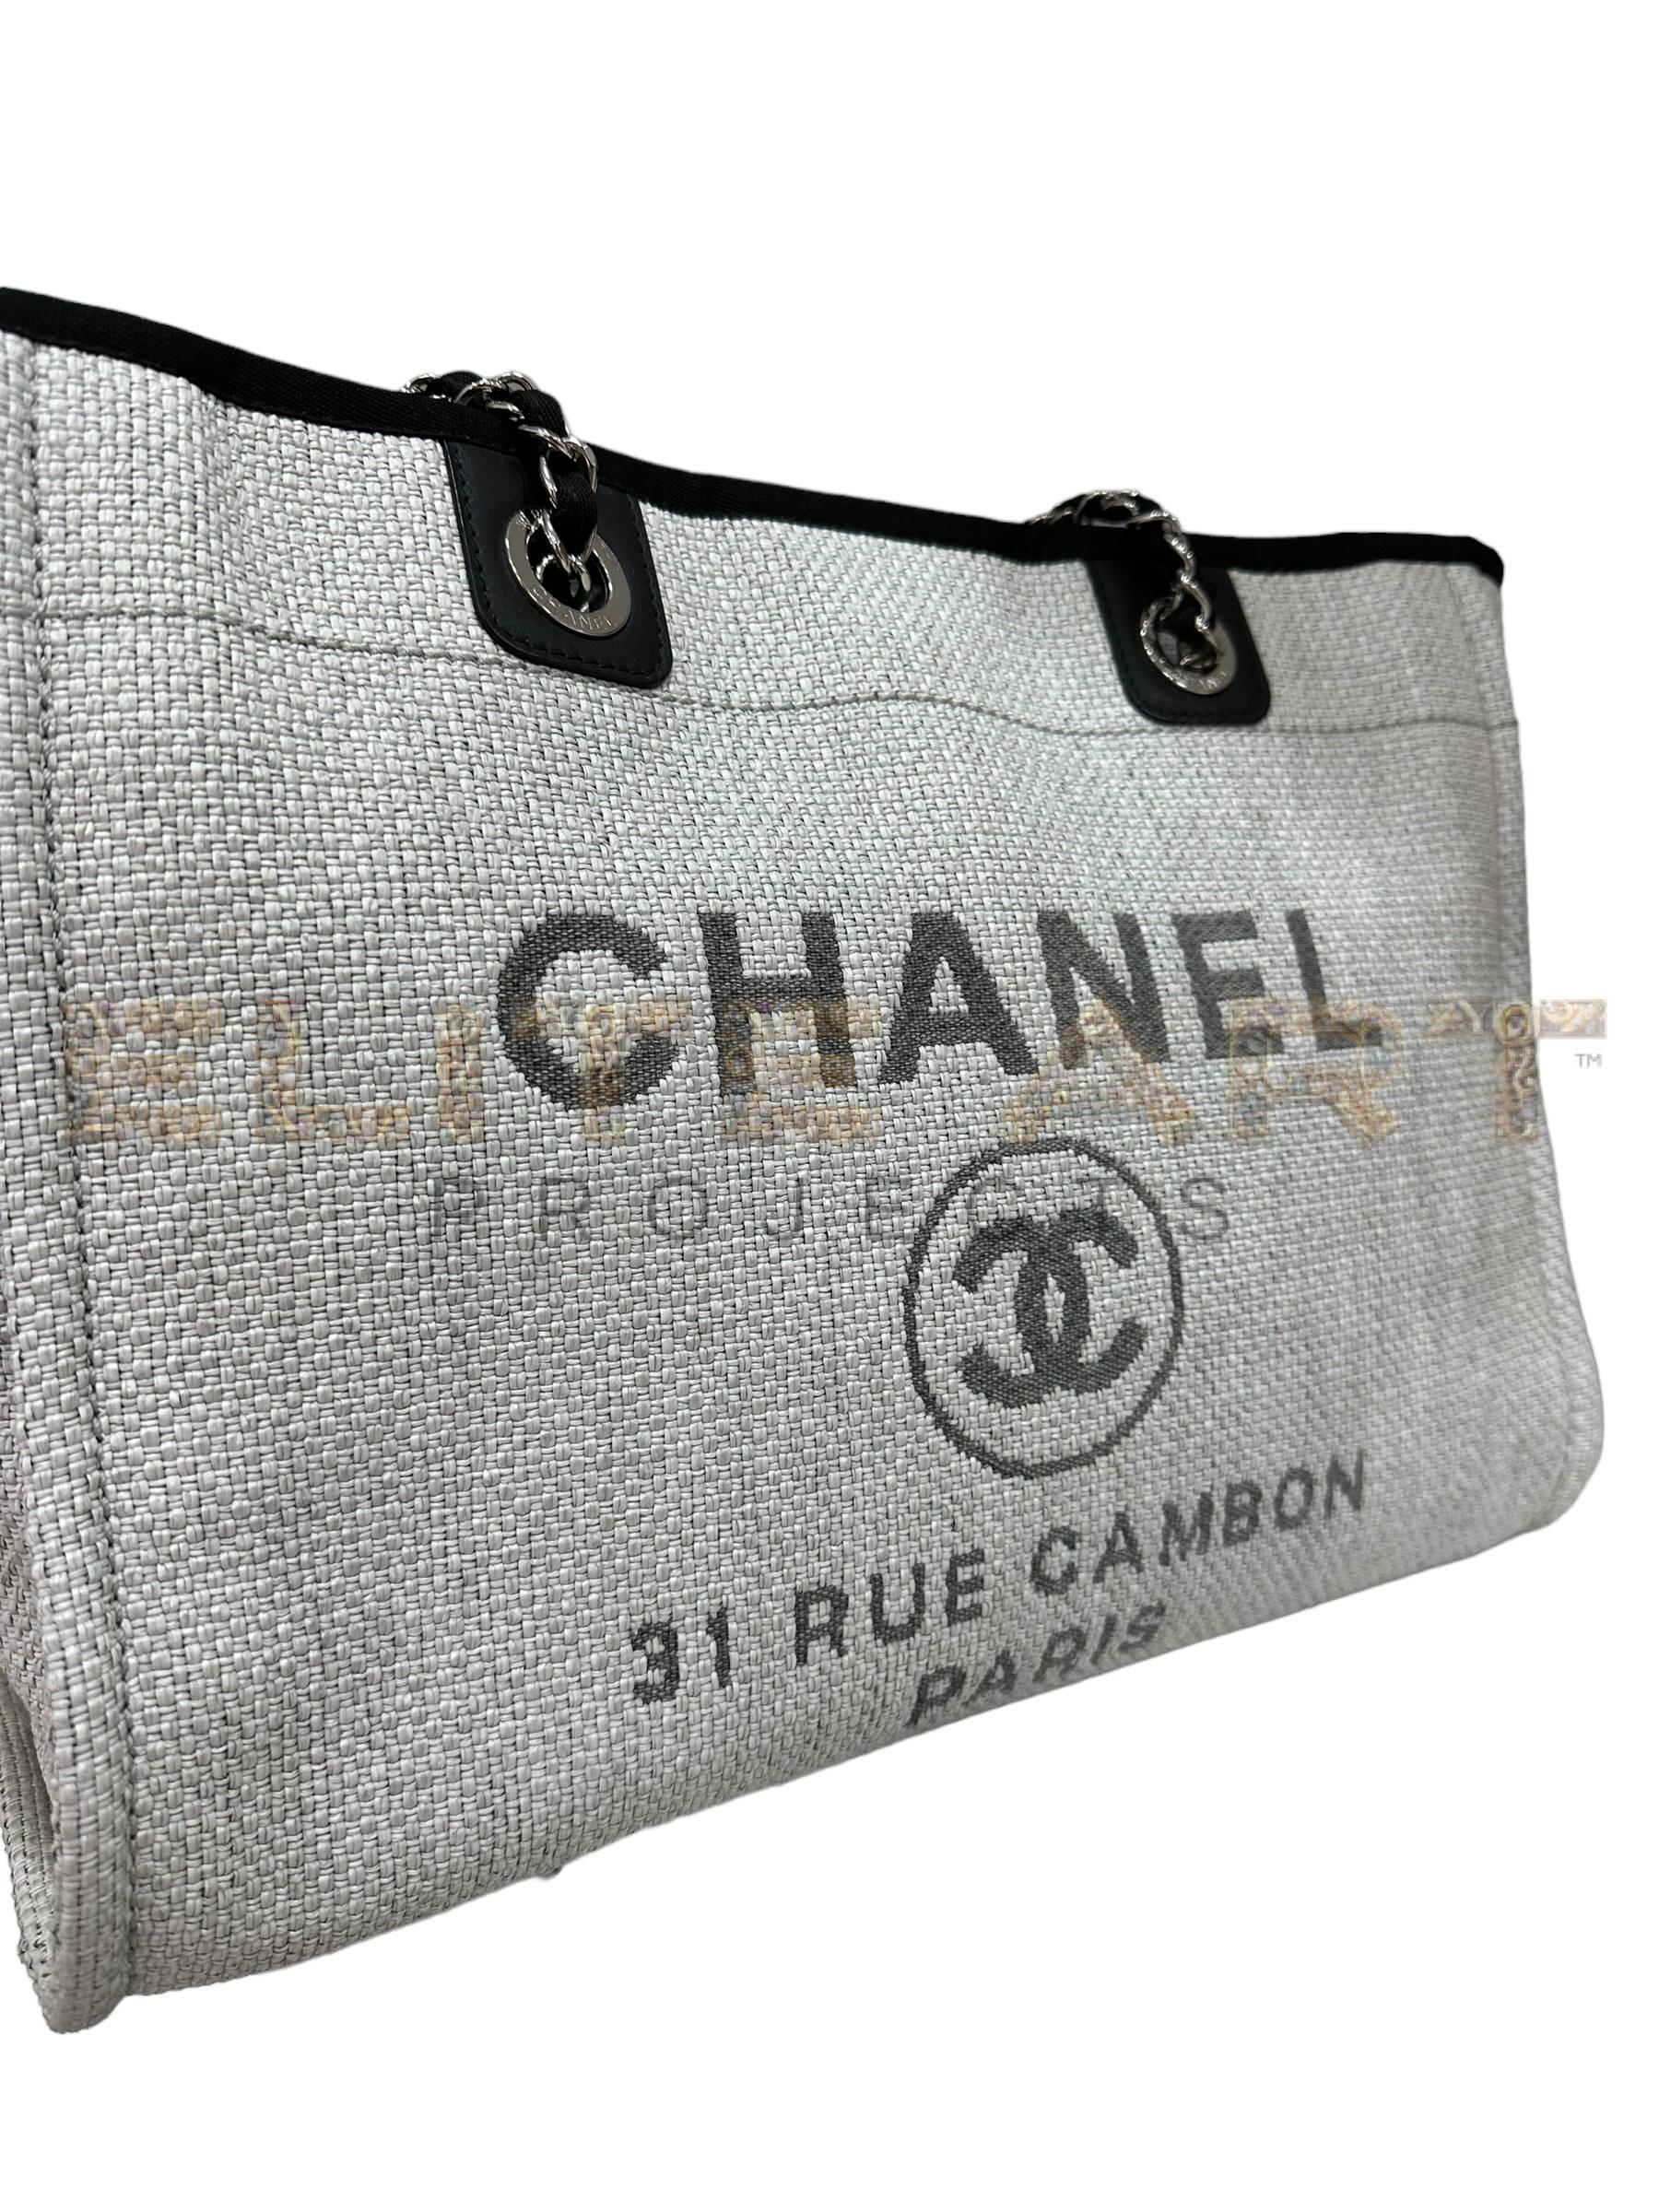 Deauville bag, light gray raffia, black fabric inserts, silver hardware, elegance